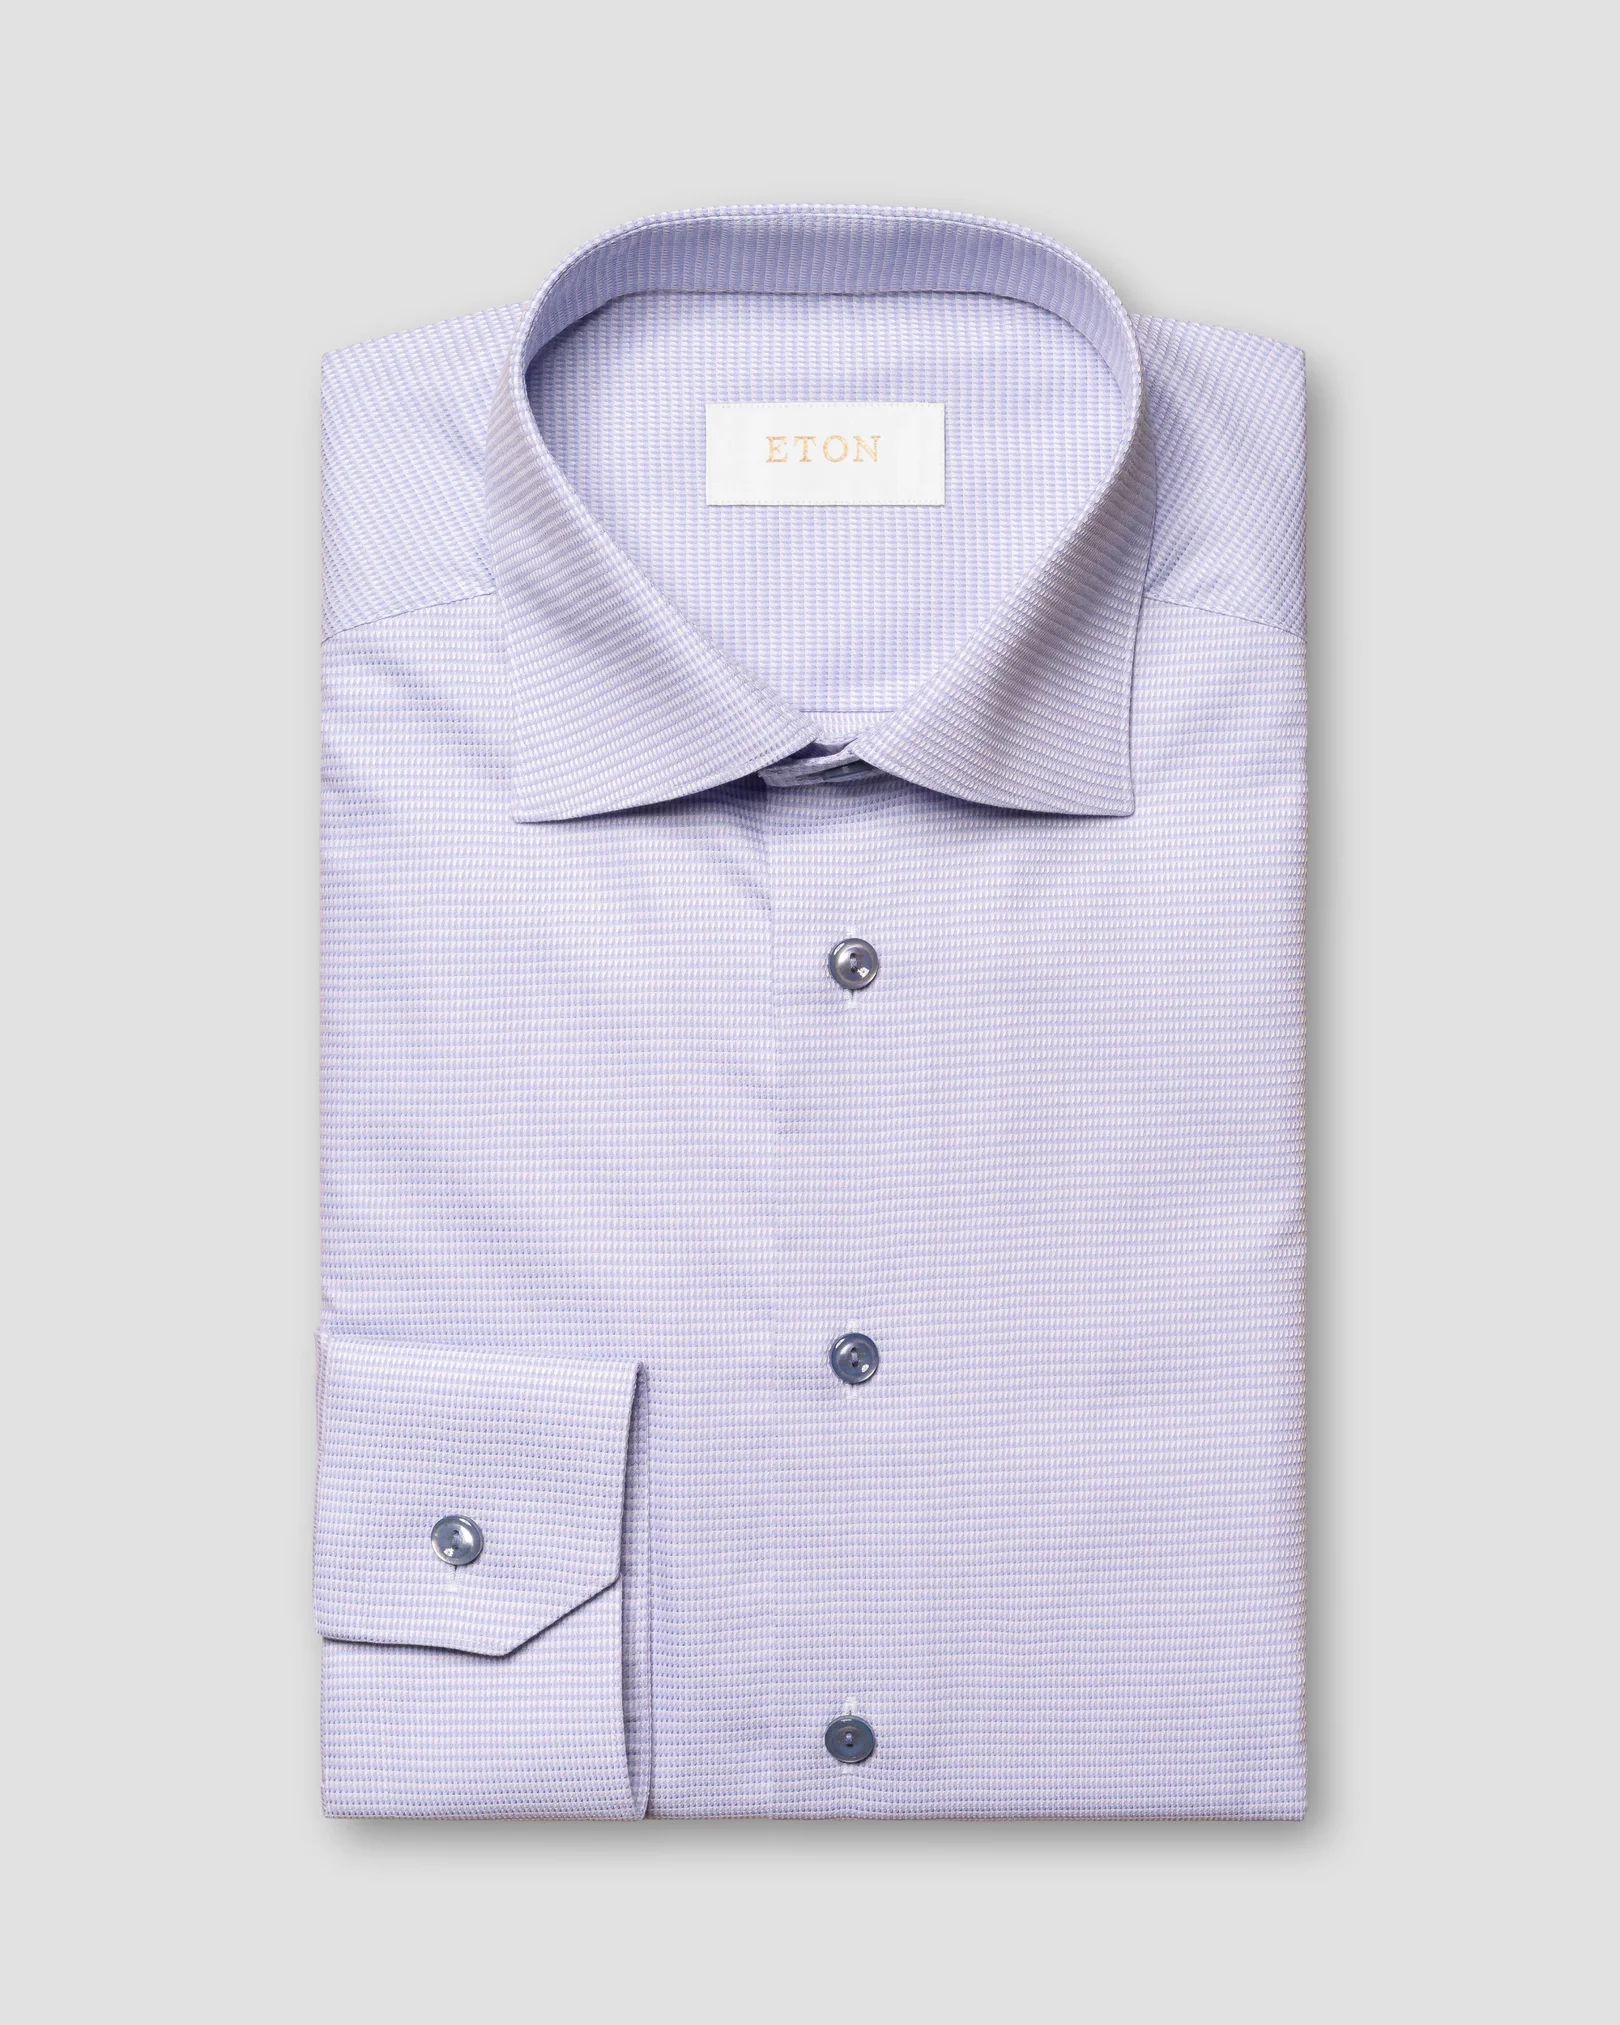 Dress Shirts for Men - Business Shirts - Eton